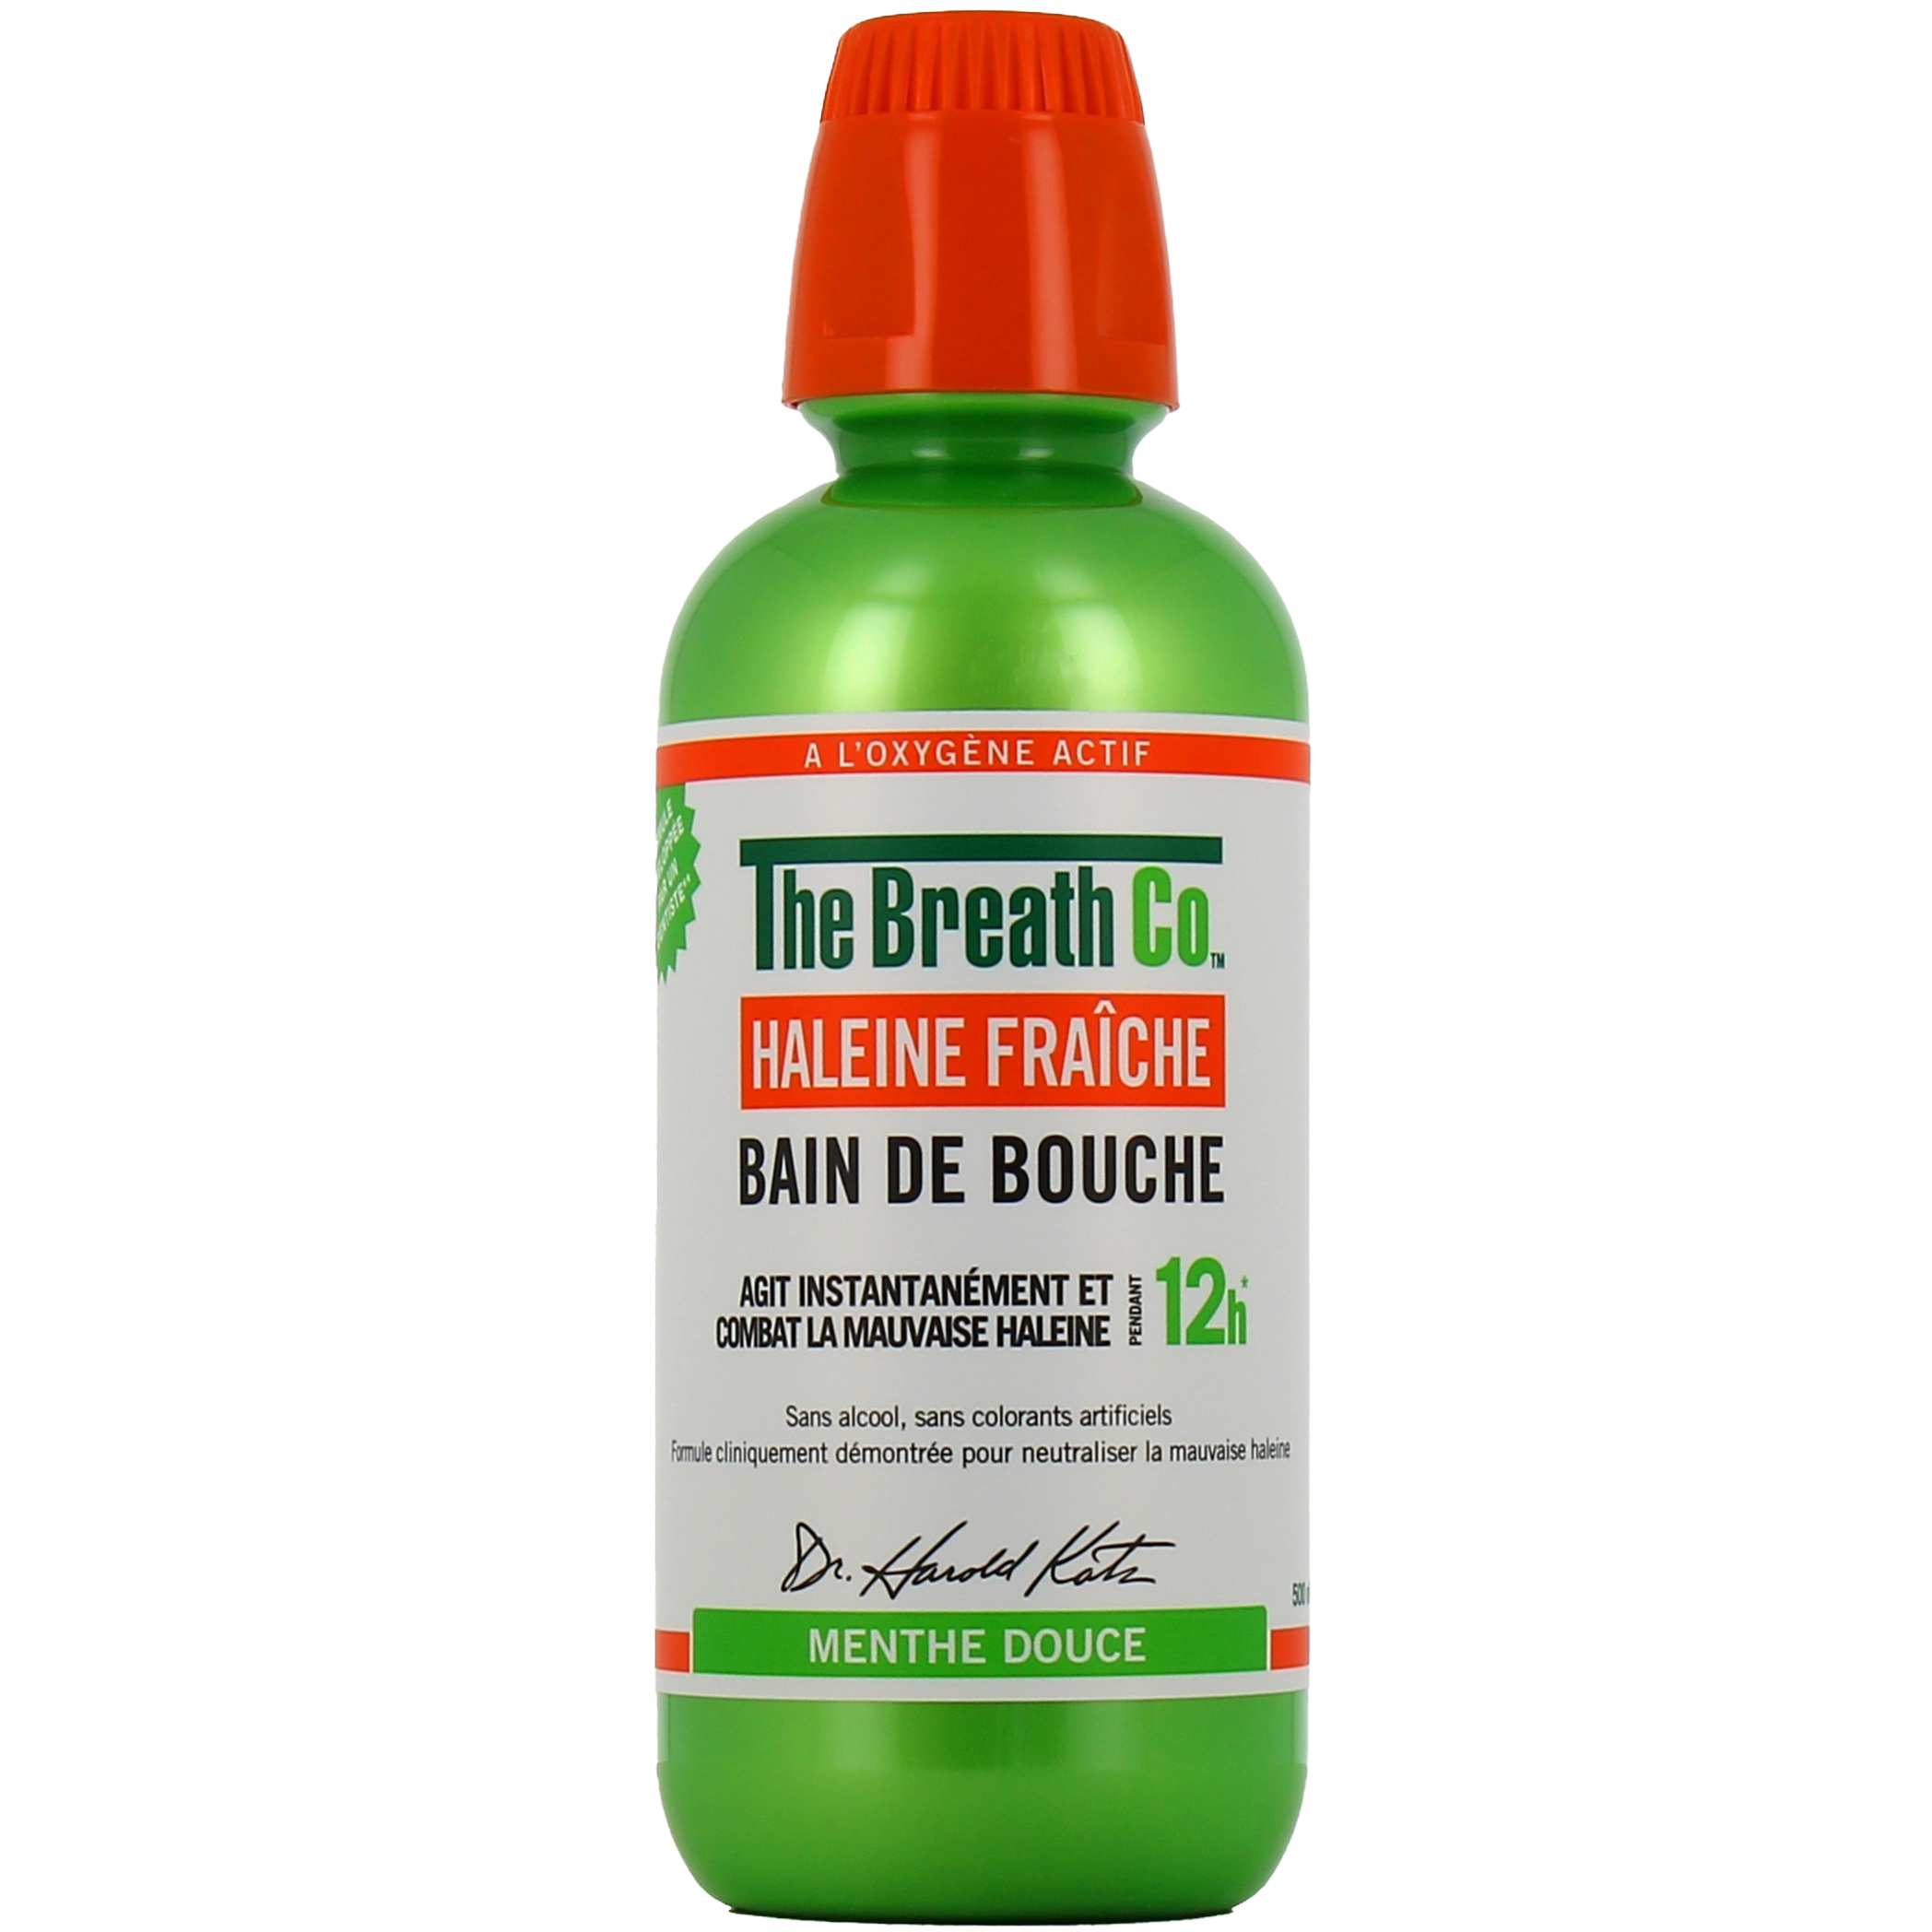 THE BREATH CO BAIN DE BOUCHE MENTHE DOUCE 500ML